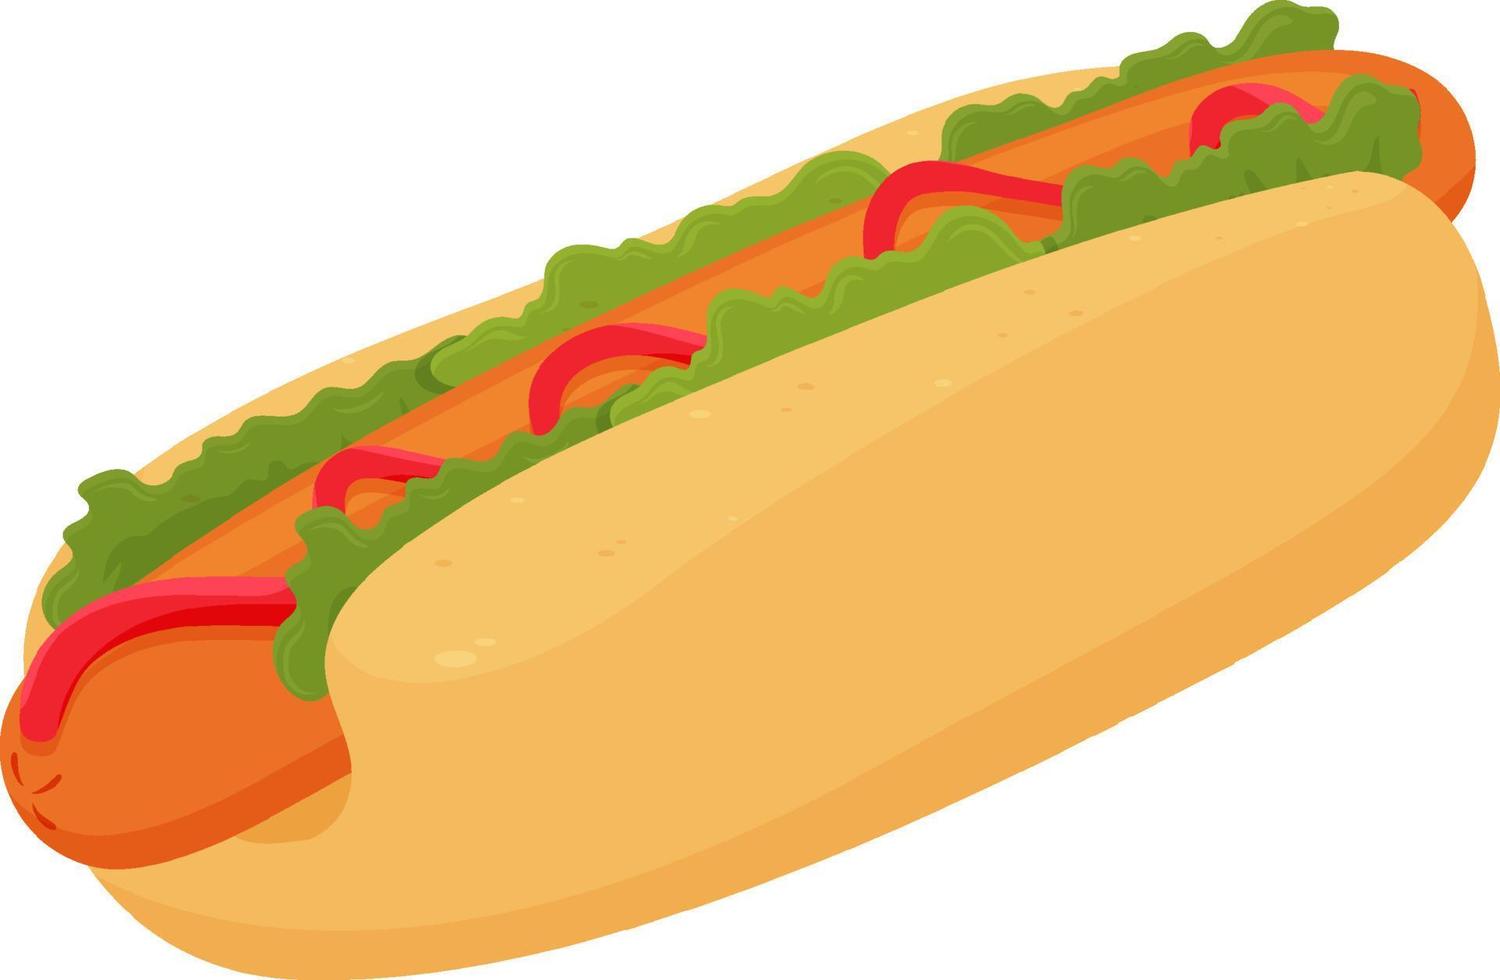 Hotdog in cartoon style isolated vector